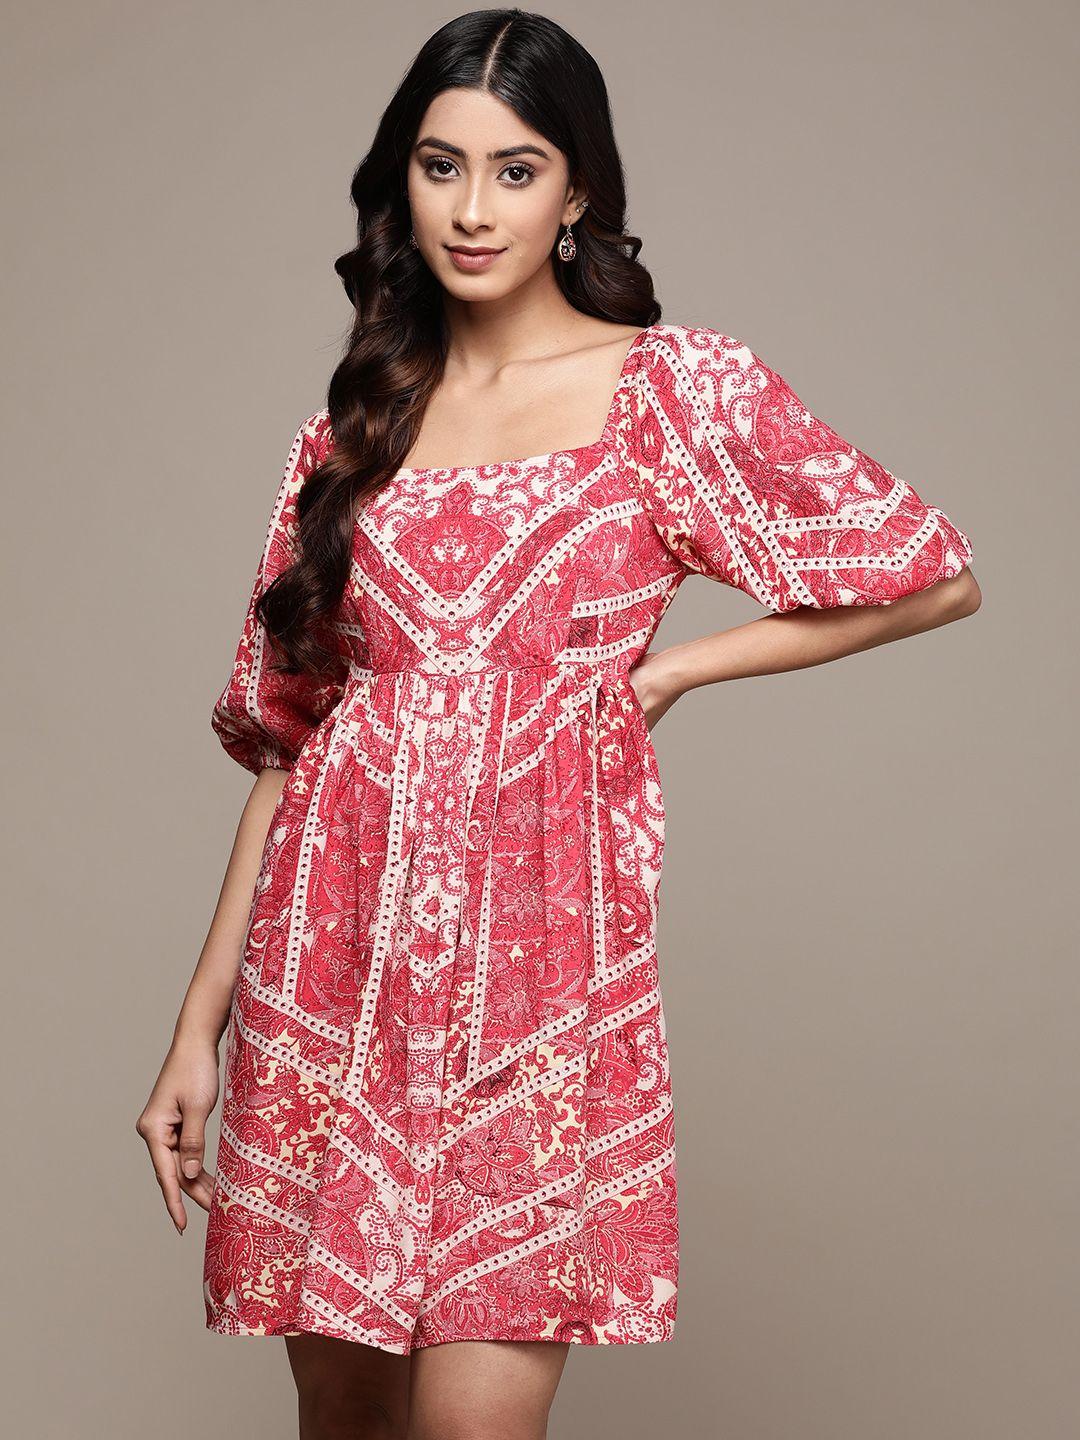 label-ritu-kumar-pink-&-white-floral-a-line-dress